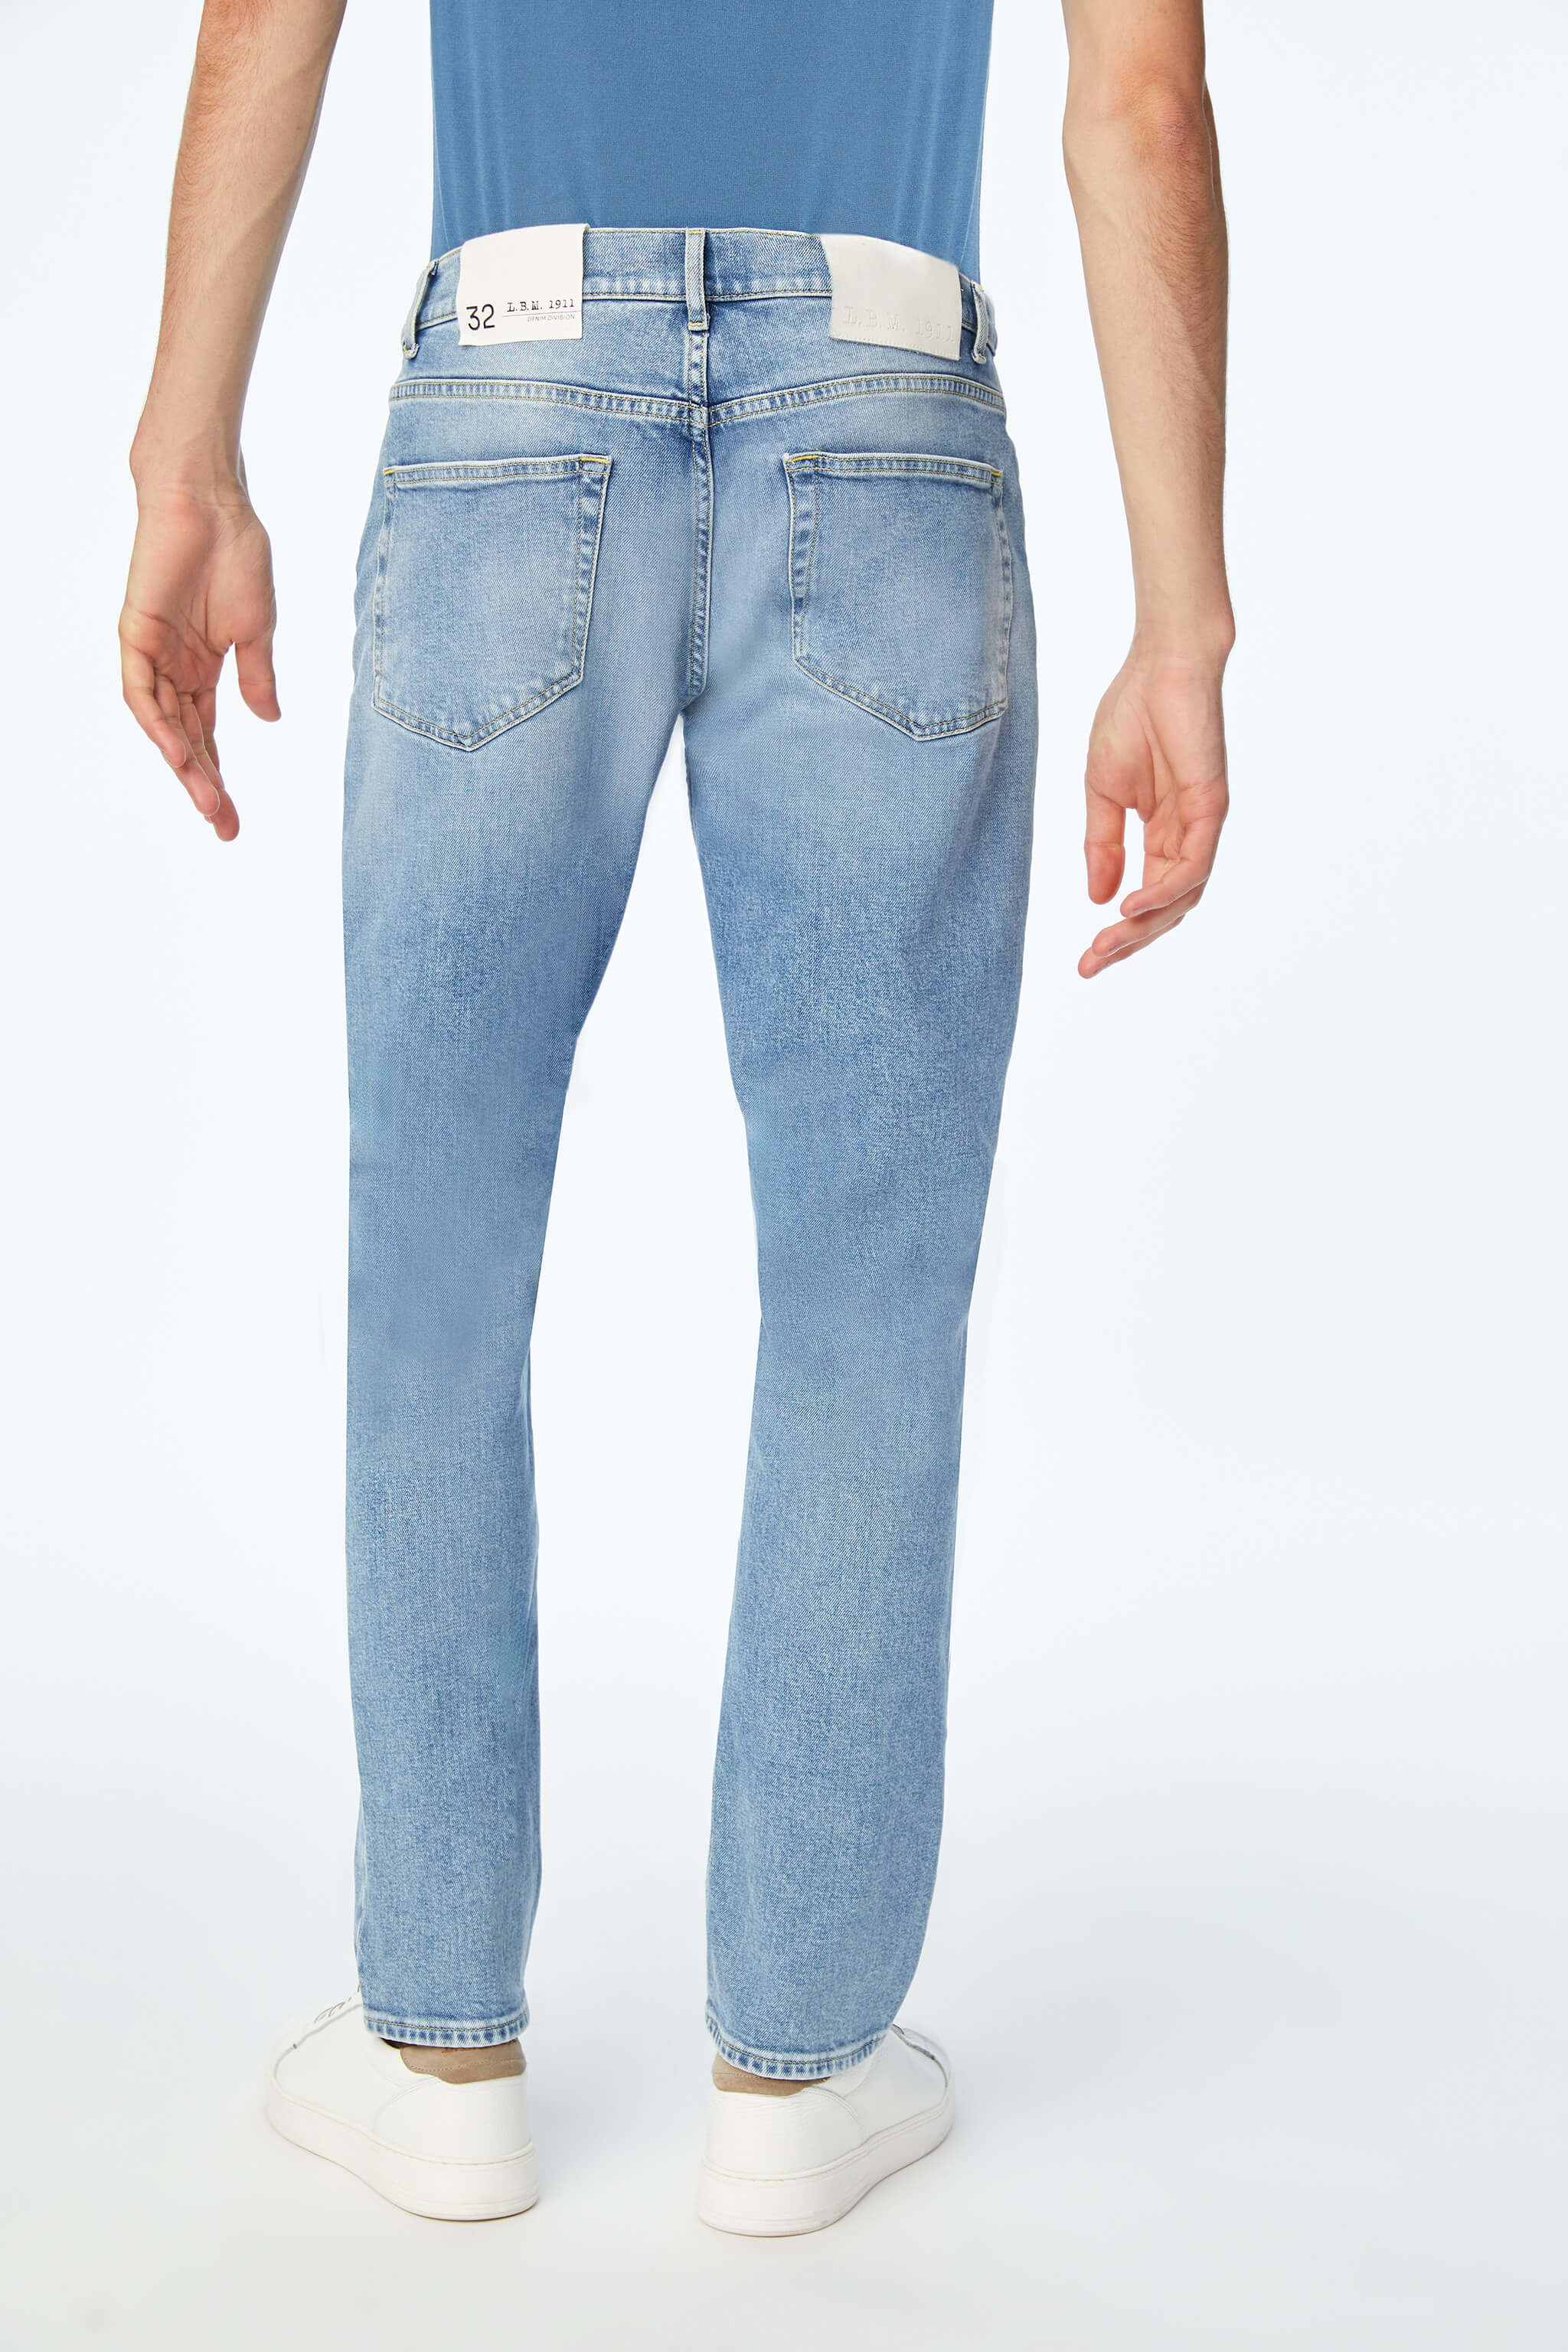 Straight cut 5 pocket Light Blue jeans